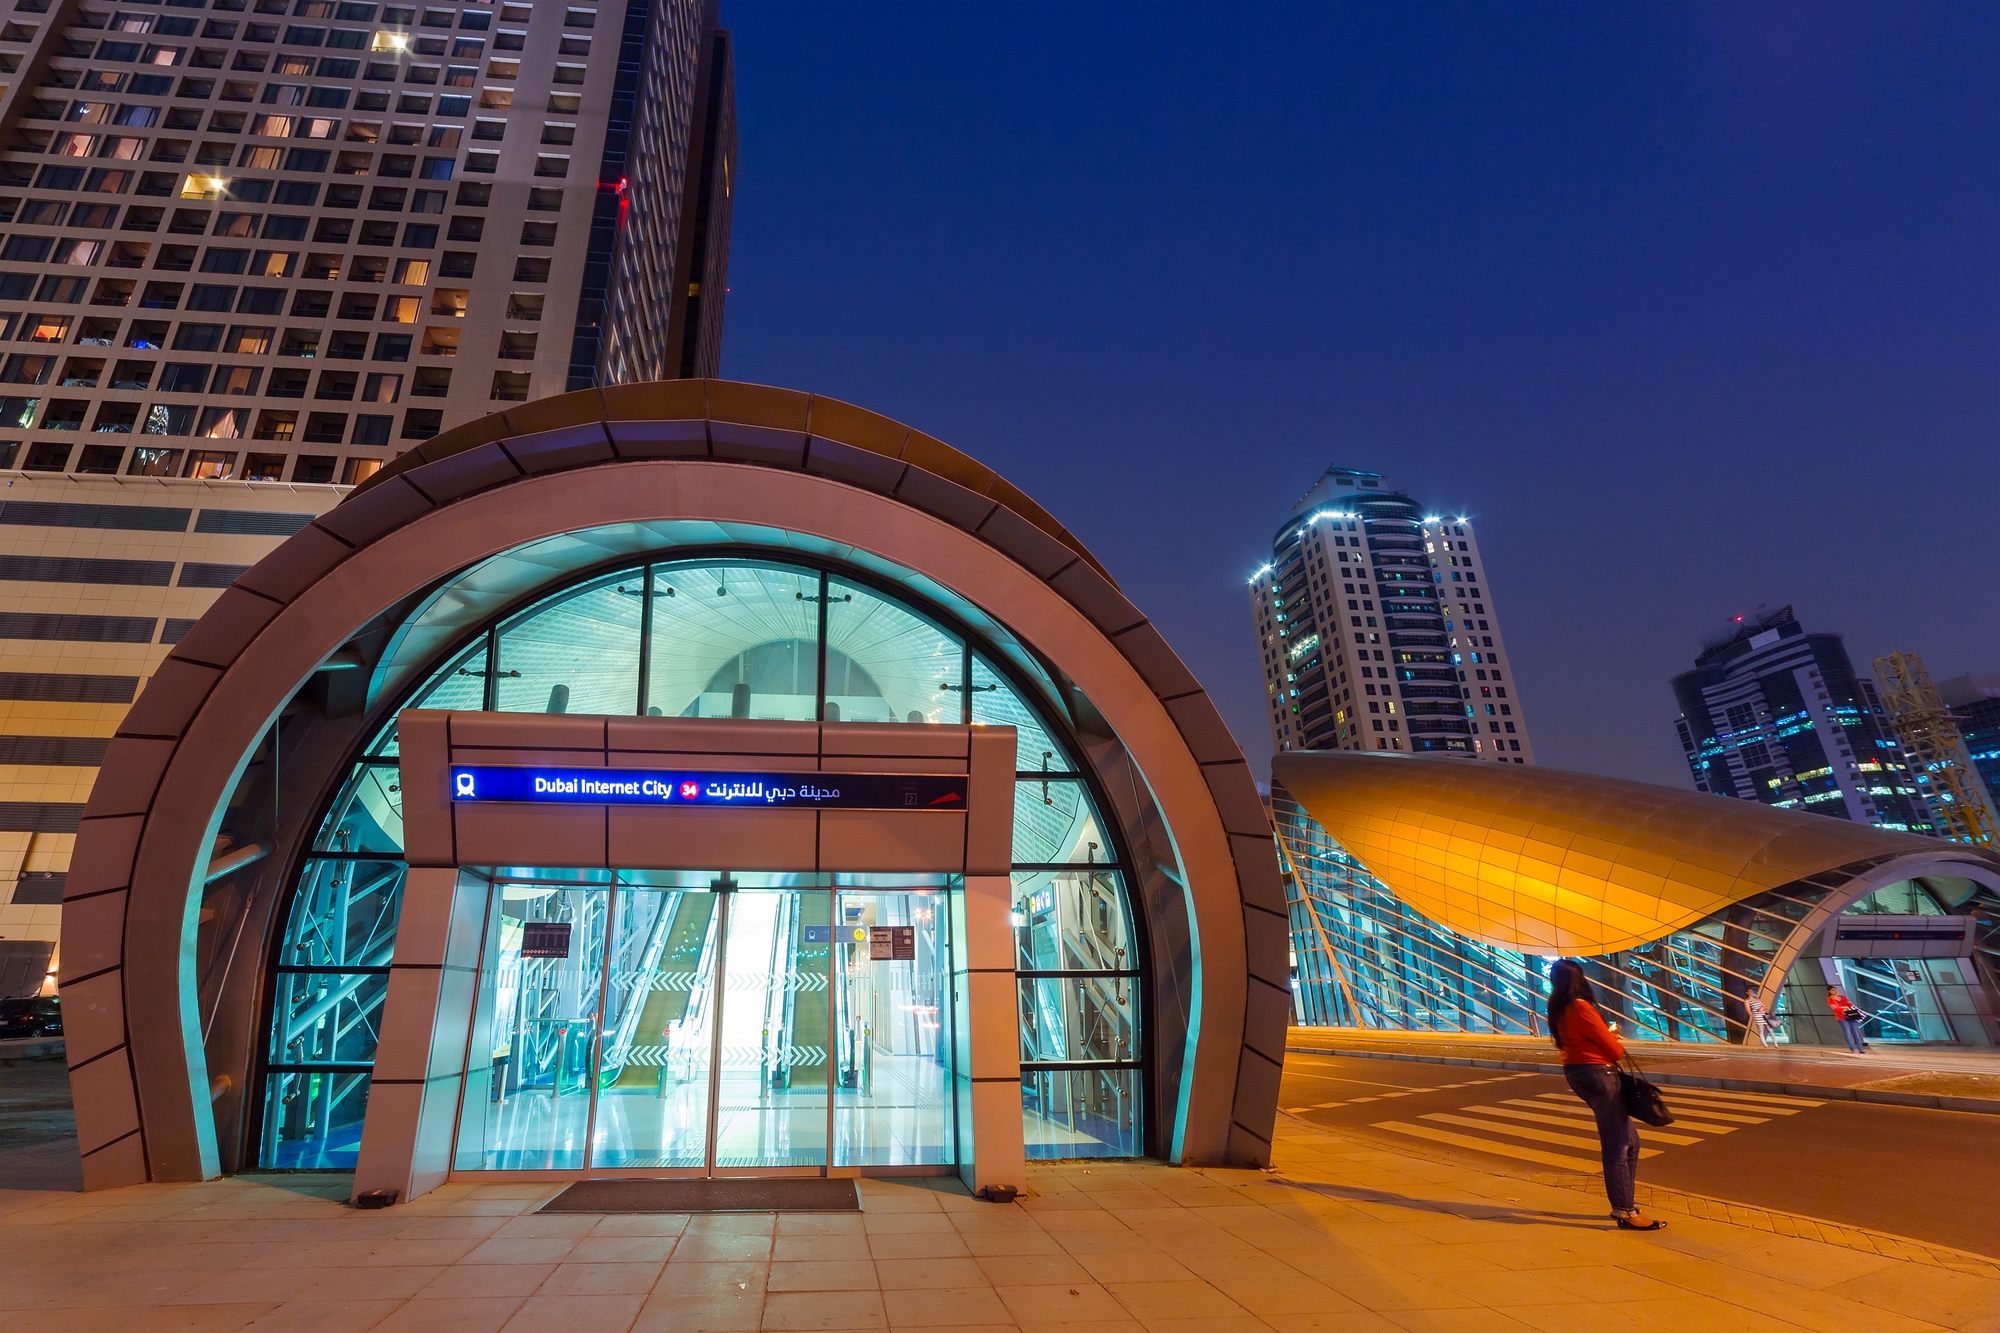 Дубай интернет сити. Дубай интернет Сити метро. Станция метро Dubai Internet City. Метро Дубай Internet Metro Station. Станция метро Дубай интернет Сити.